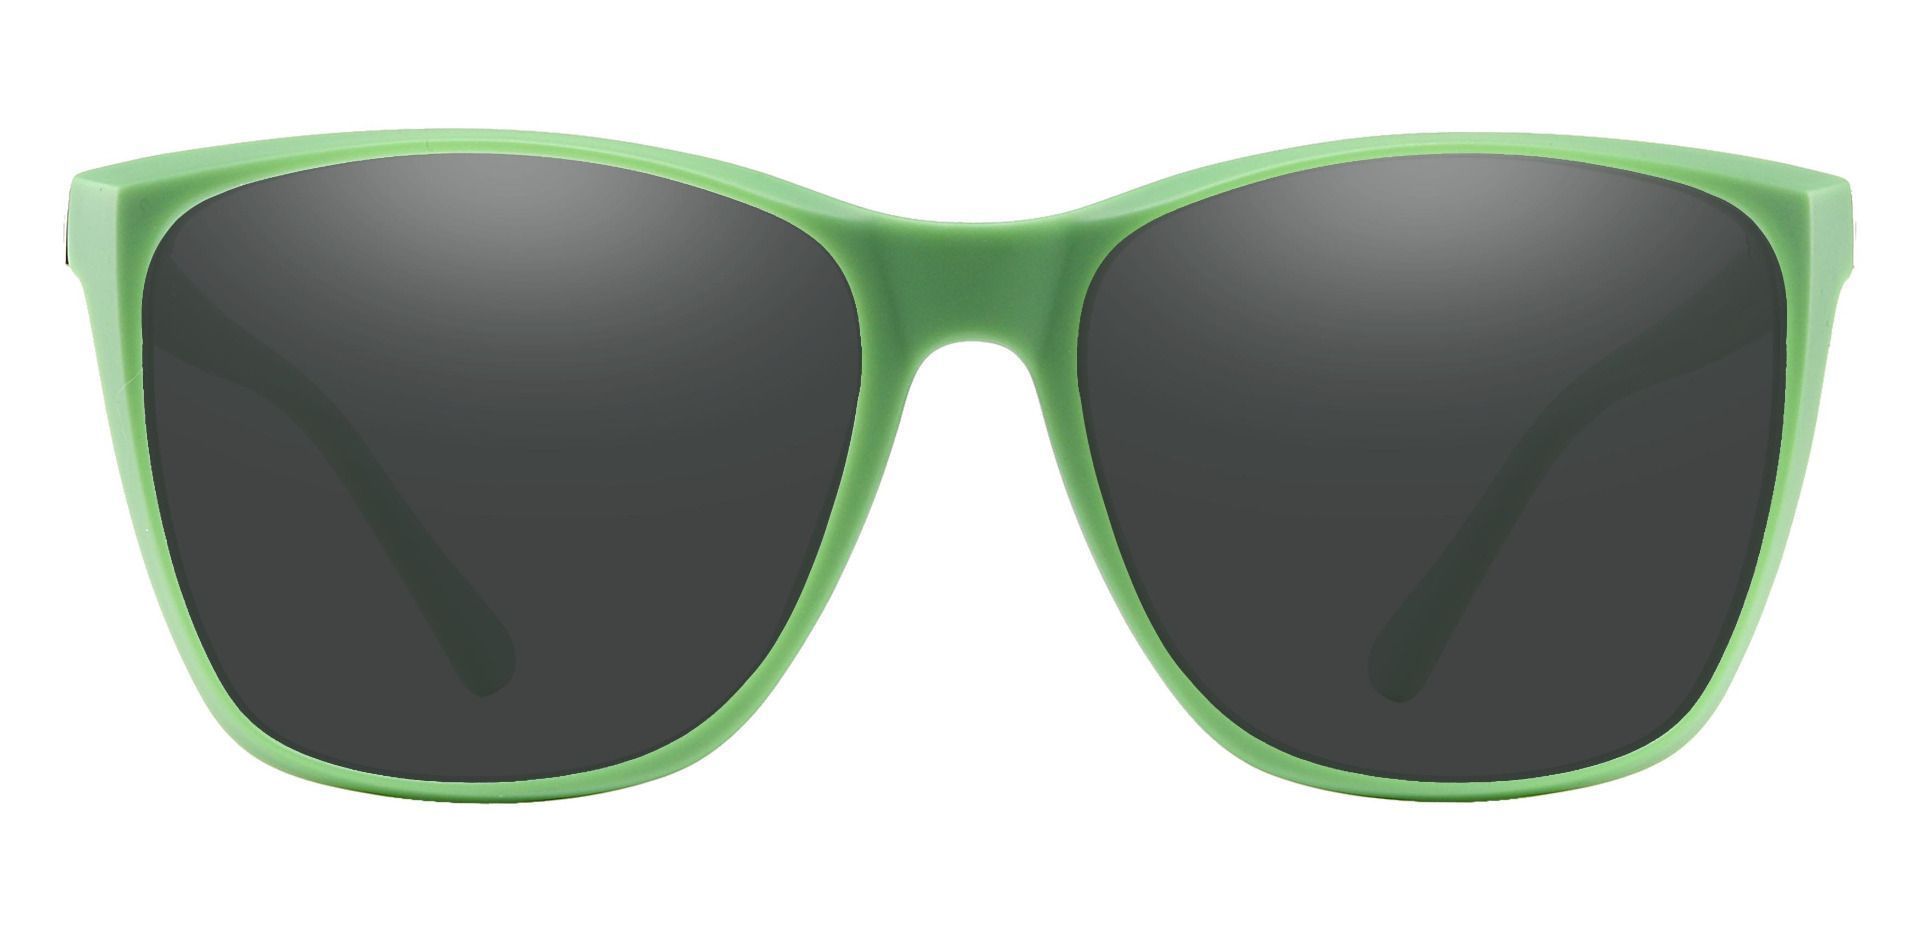 Hickory Square Progressive Sunglasses - Green Frame With Gray Lenses